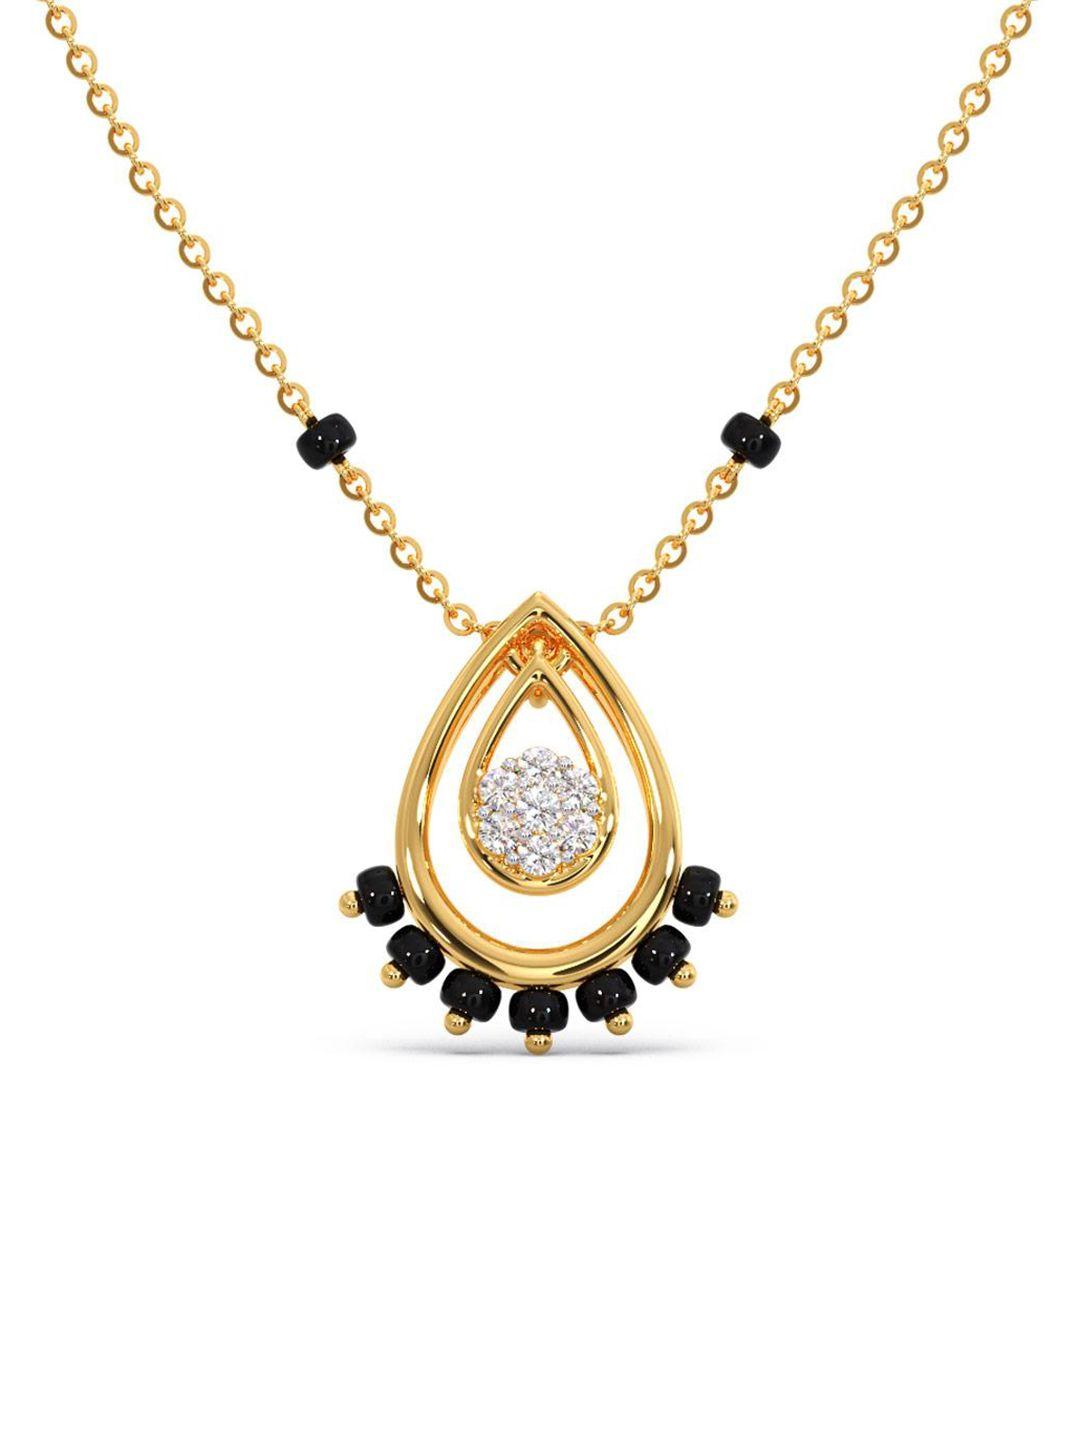 candere a kalyan jewellers company 18k gold bis hallmark & certified diamond mangalsutra